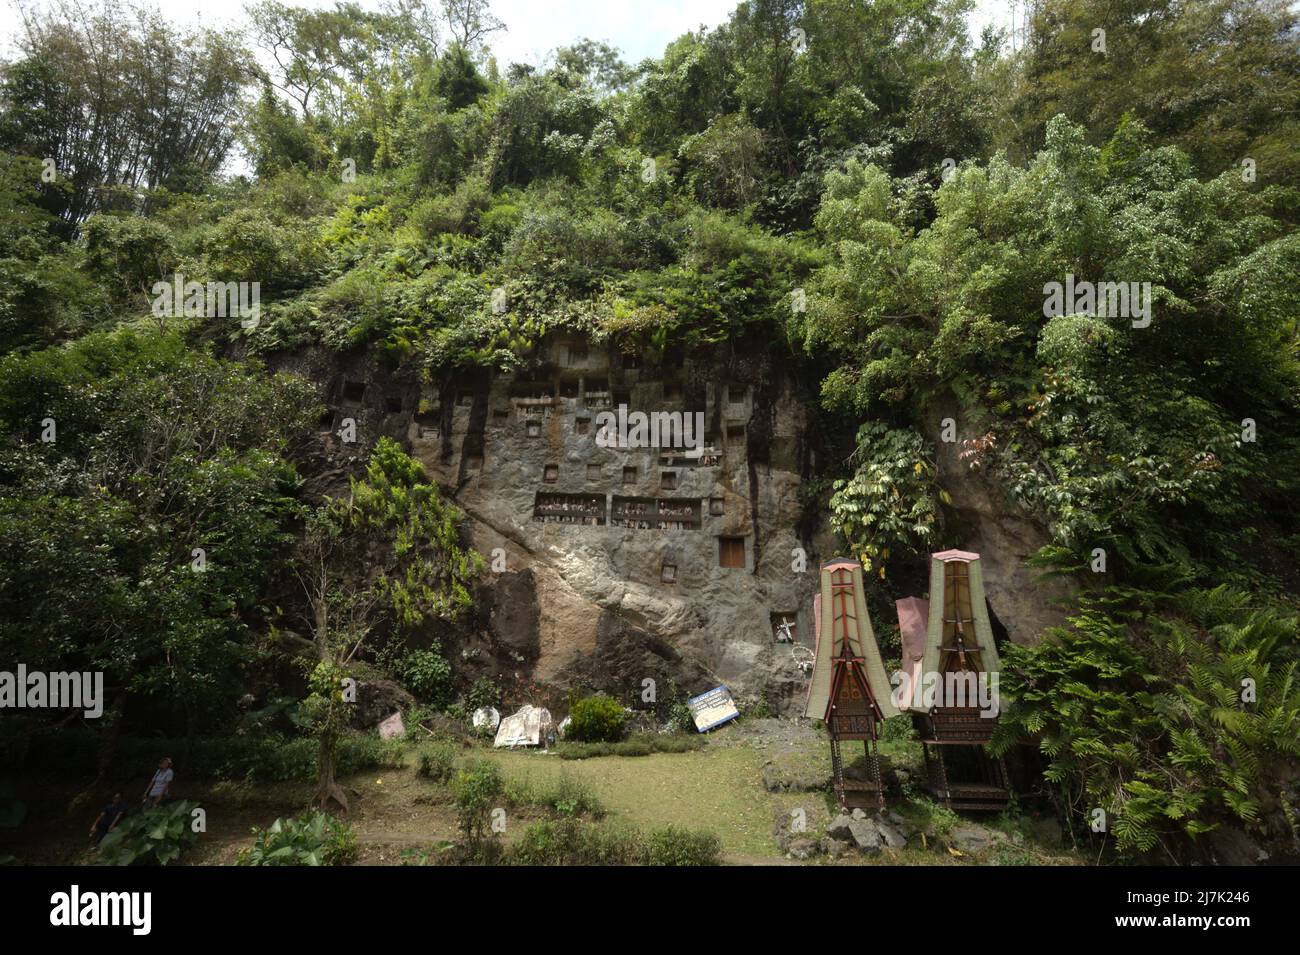 Cliff diente als traditionelle Grabstätte in Lemo, Nord-Toraja, Süd-Sulawesi, Indonesien. Stockfoto